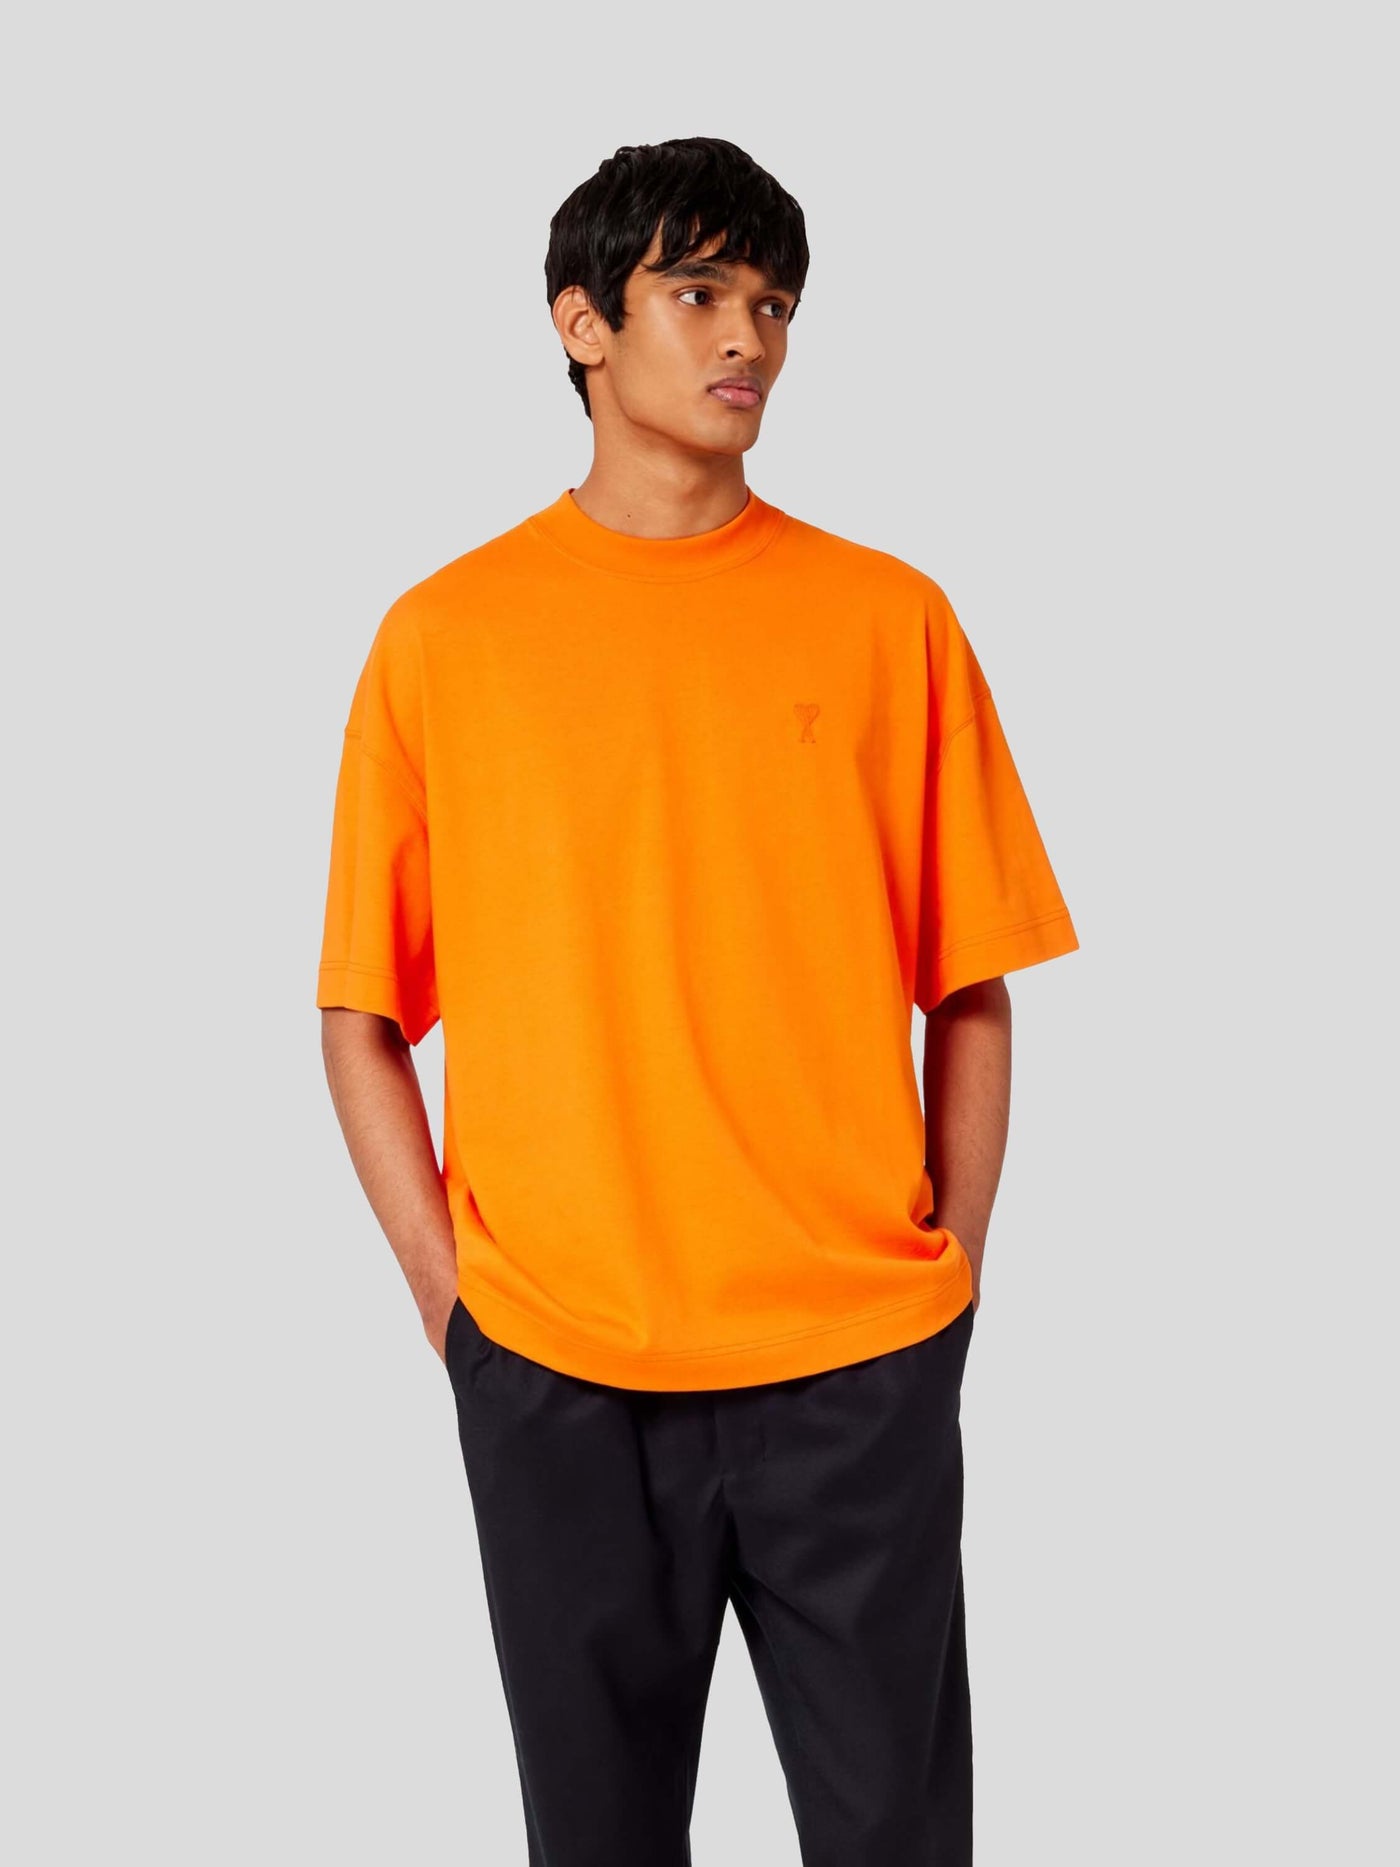 AMI Paris Shirts & Polos | Oversize T-Shirt de Coeur orange | UTS012.726 800 orange-1 / ADAM/EVE